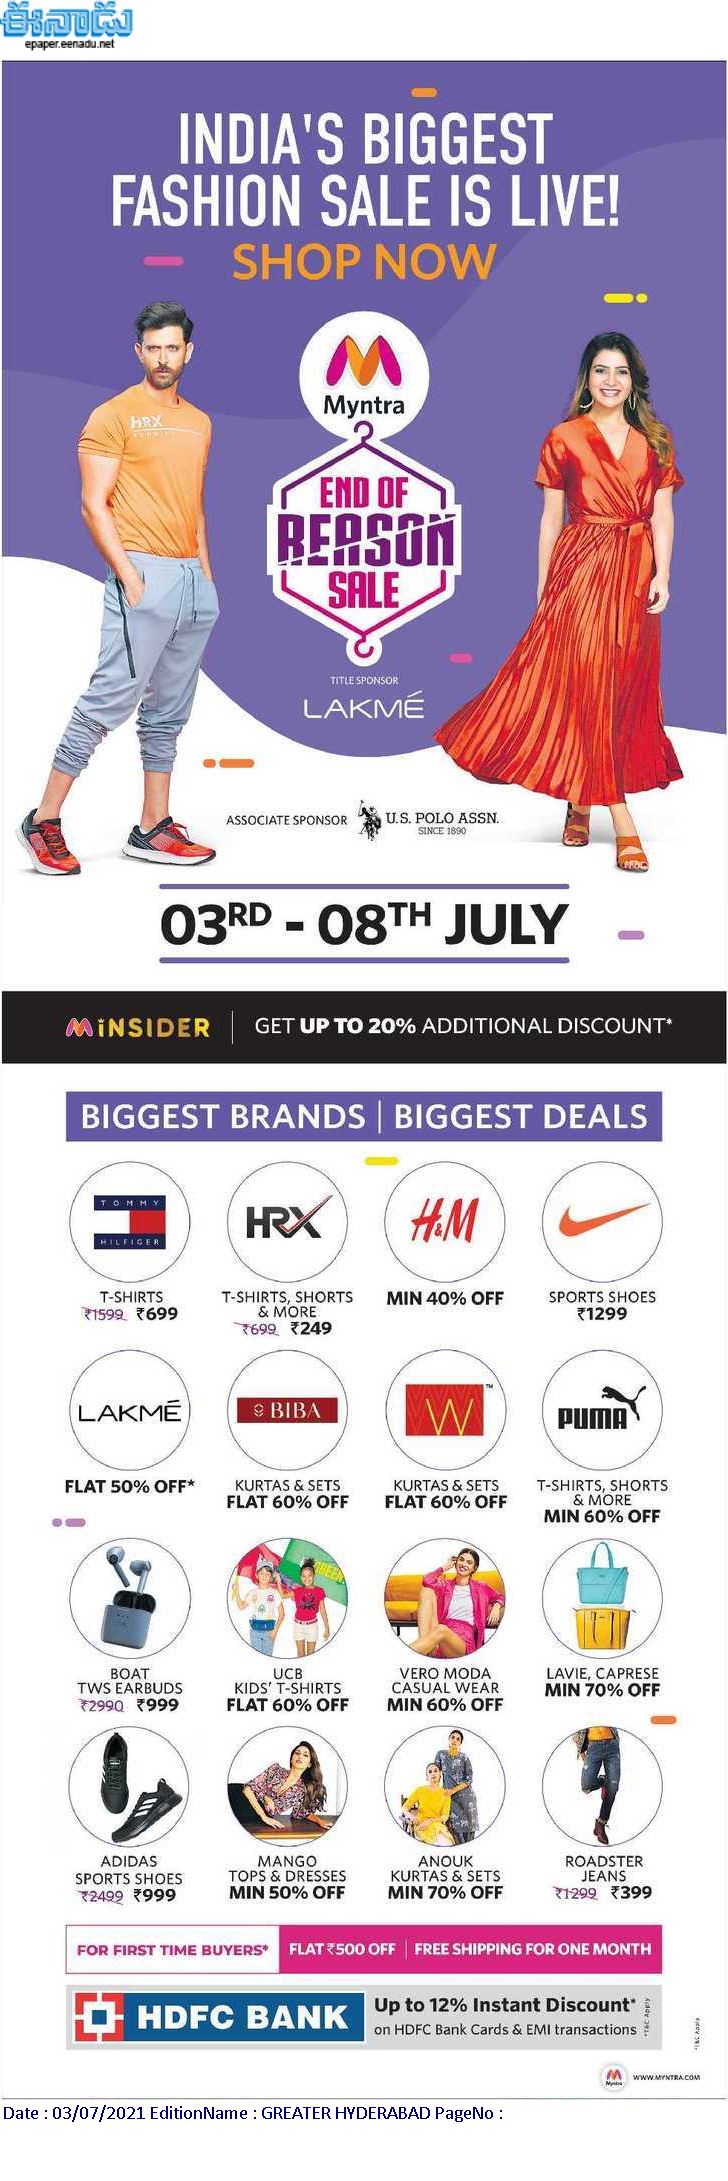 myntra-end-of-reason-sale-indias-biggest-fashion-sale-is-live-ad-eenadu-hyderabad-3-7-2021